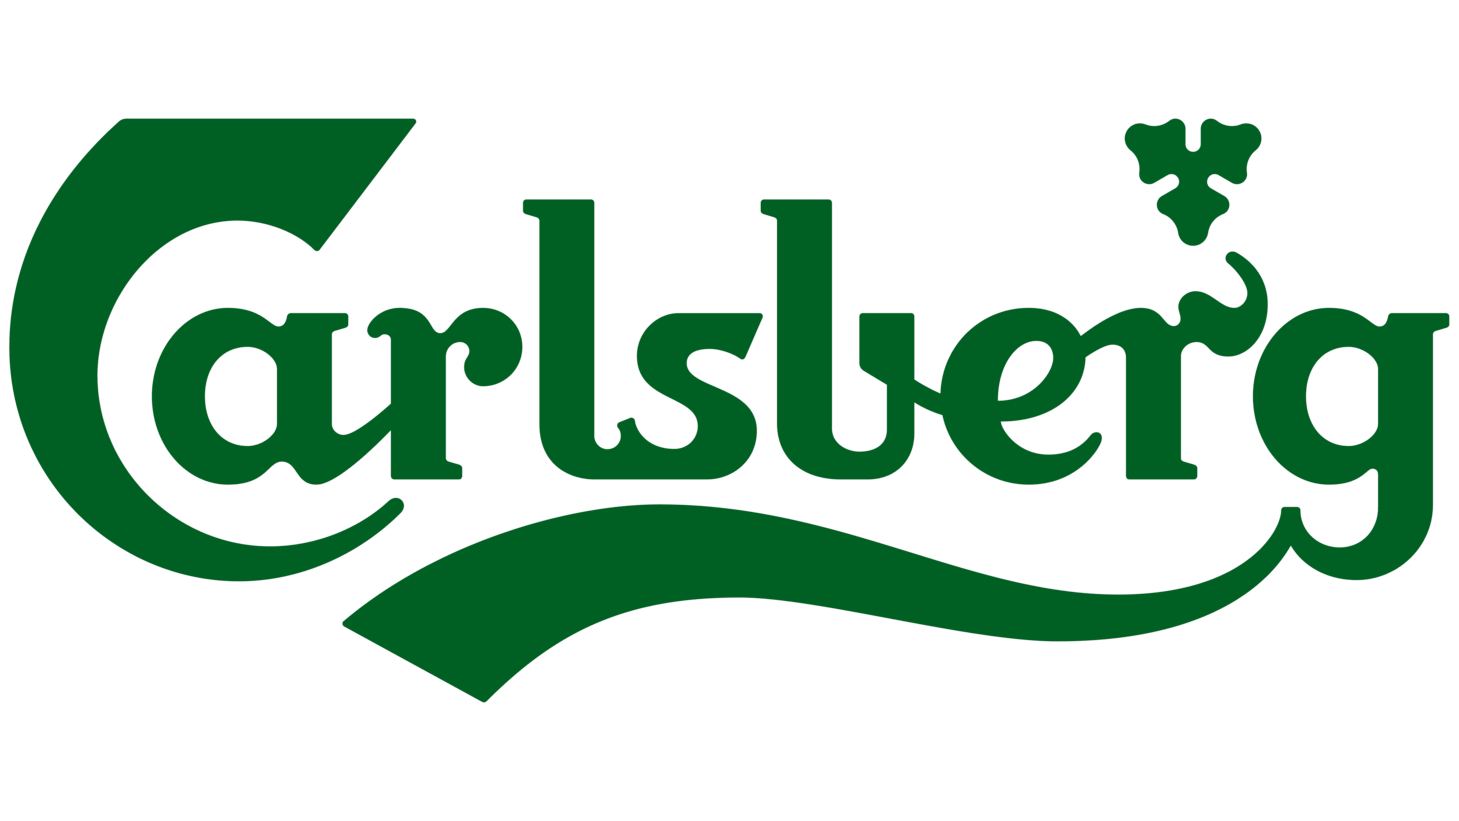 Carlsberg sign 1931 2018